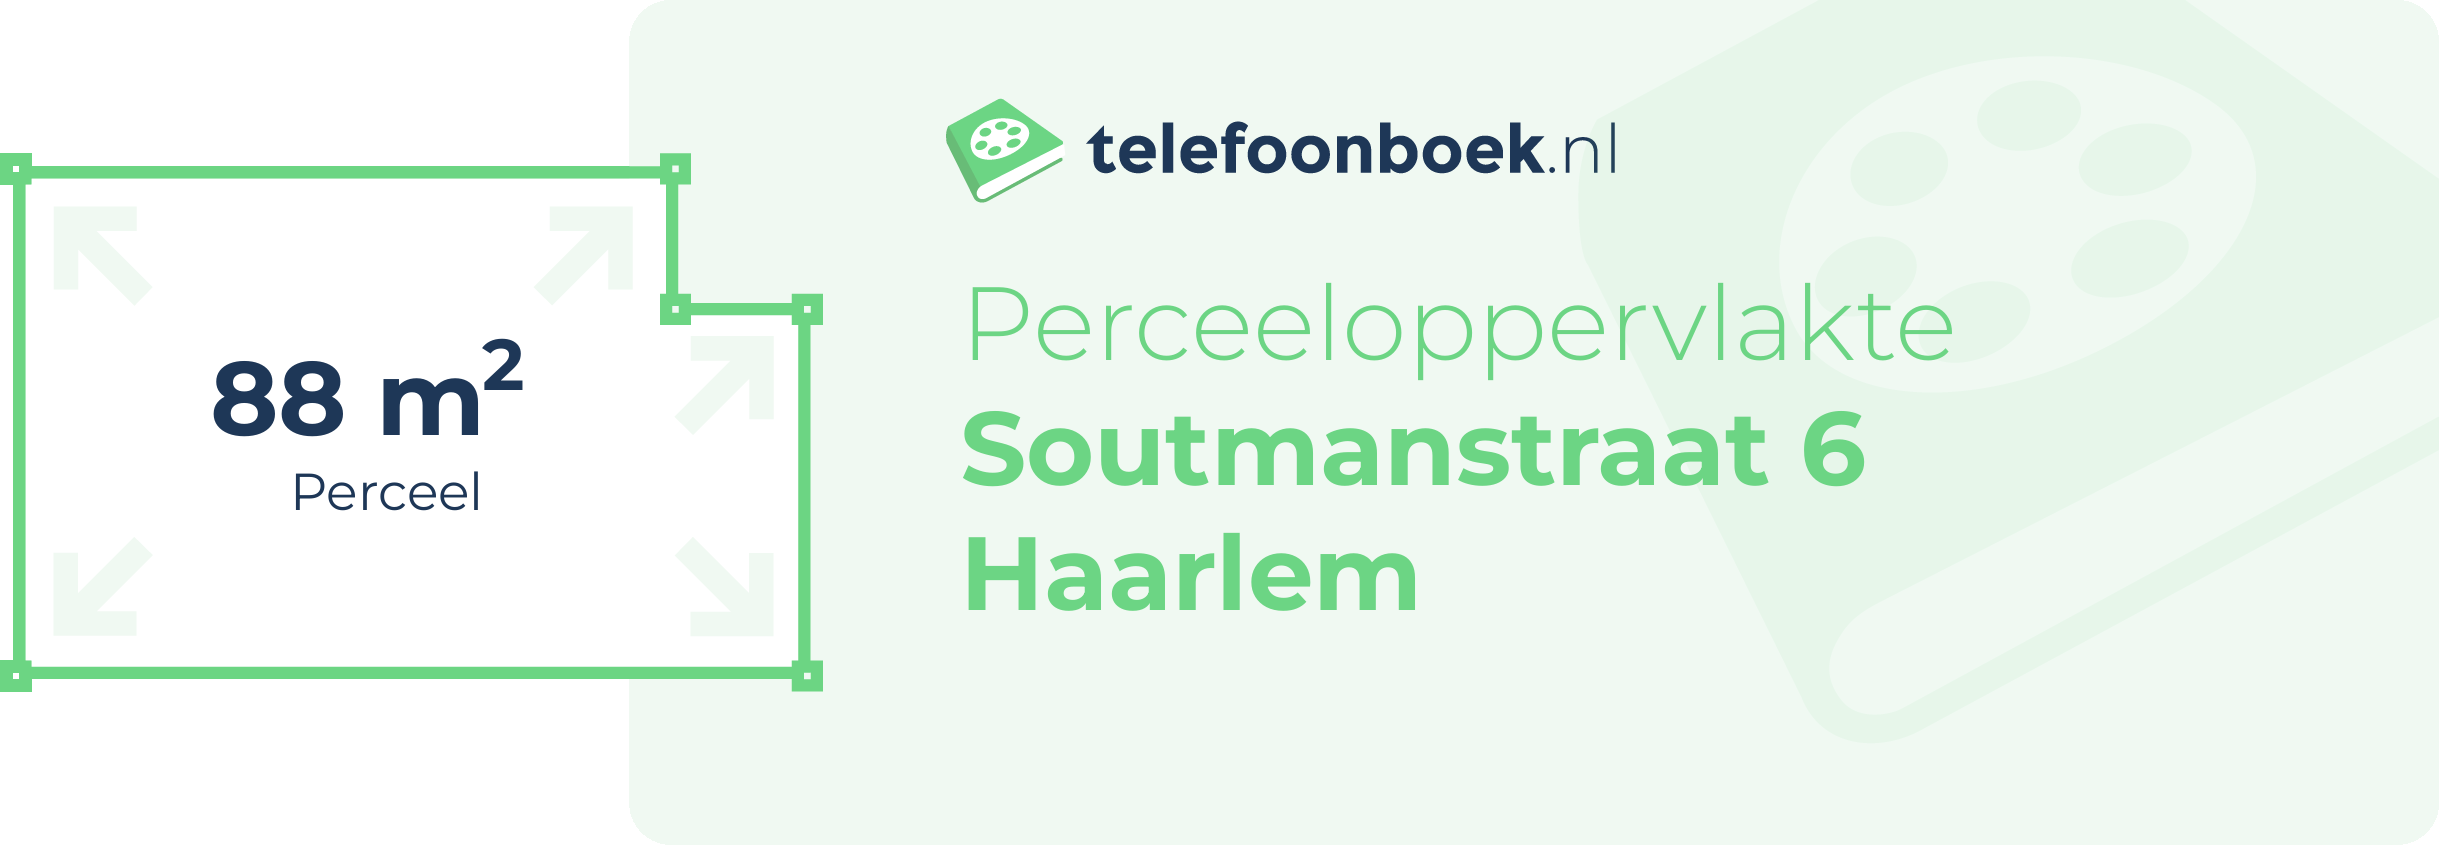 Perceeloppervlakte Soutmanstraat 6 Haarlem